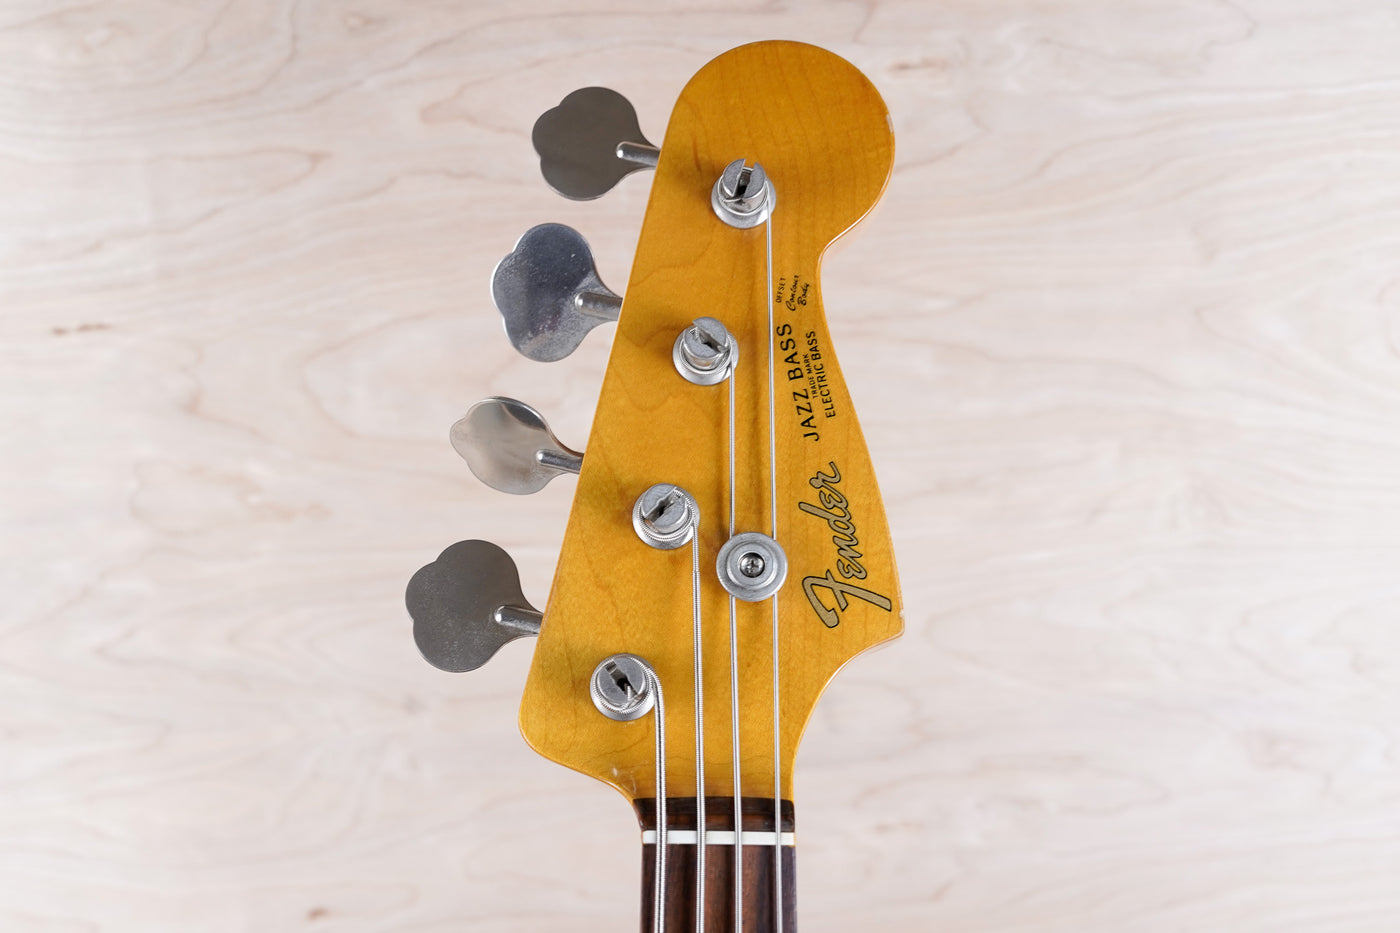 Fender JB-62 Jazz Bass Reissue CIJ 1997 Sunburst Crafted in Japan w/ Bag